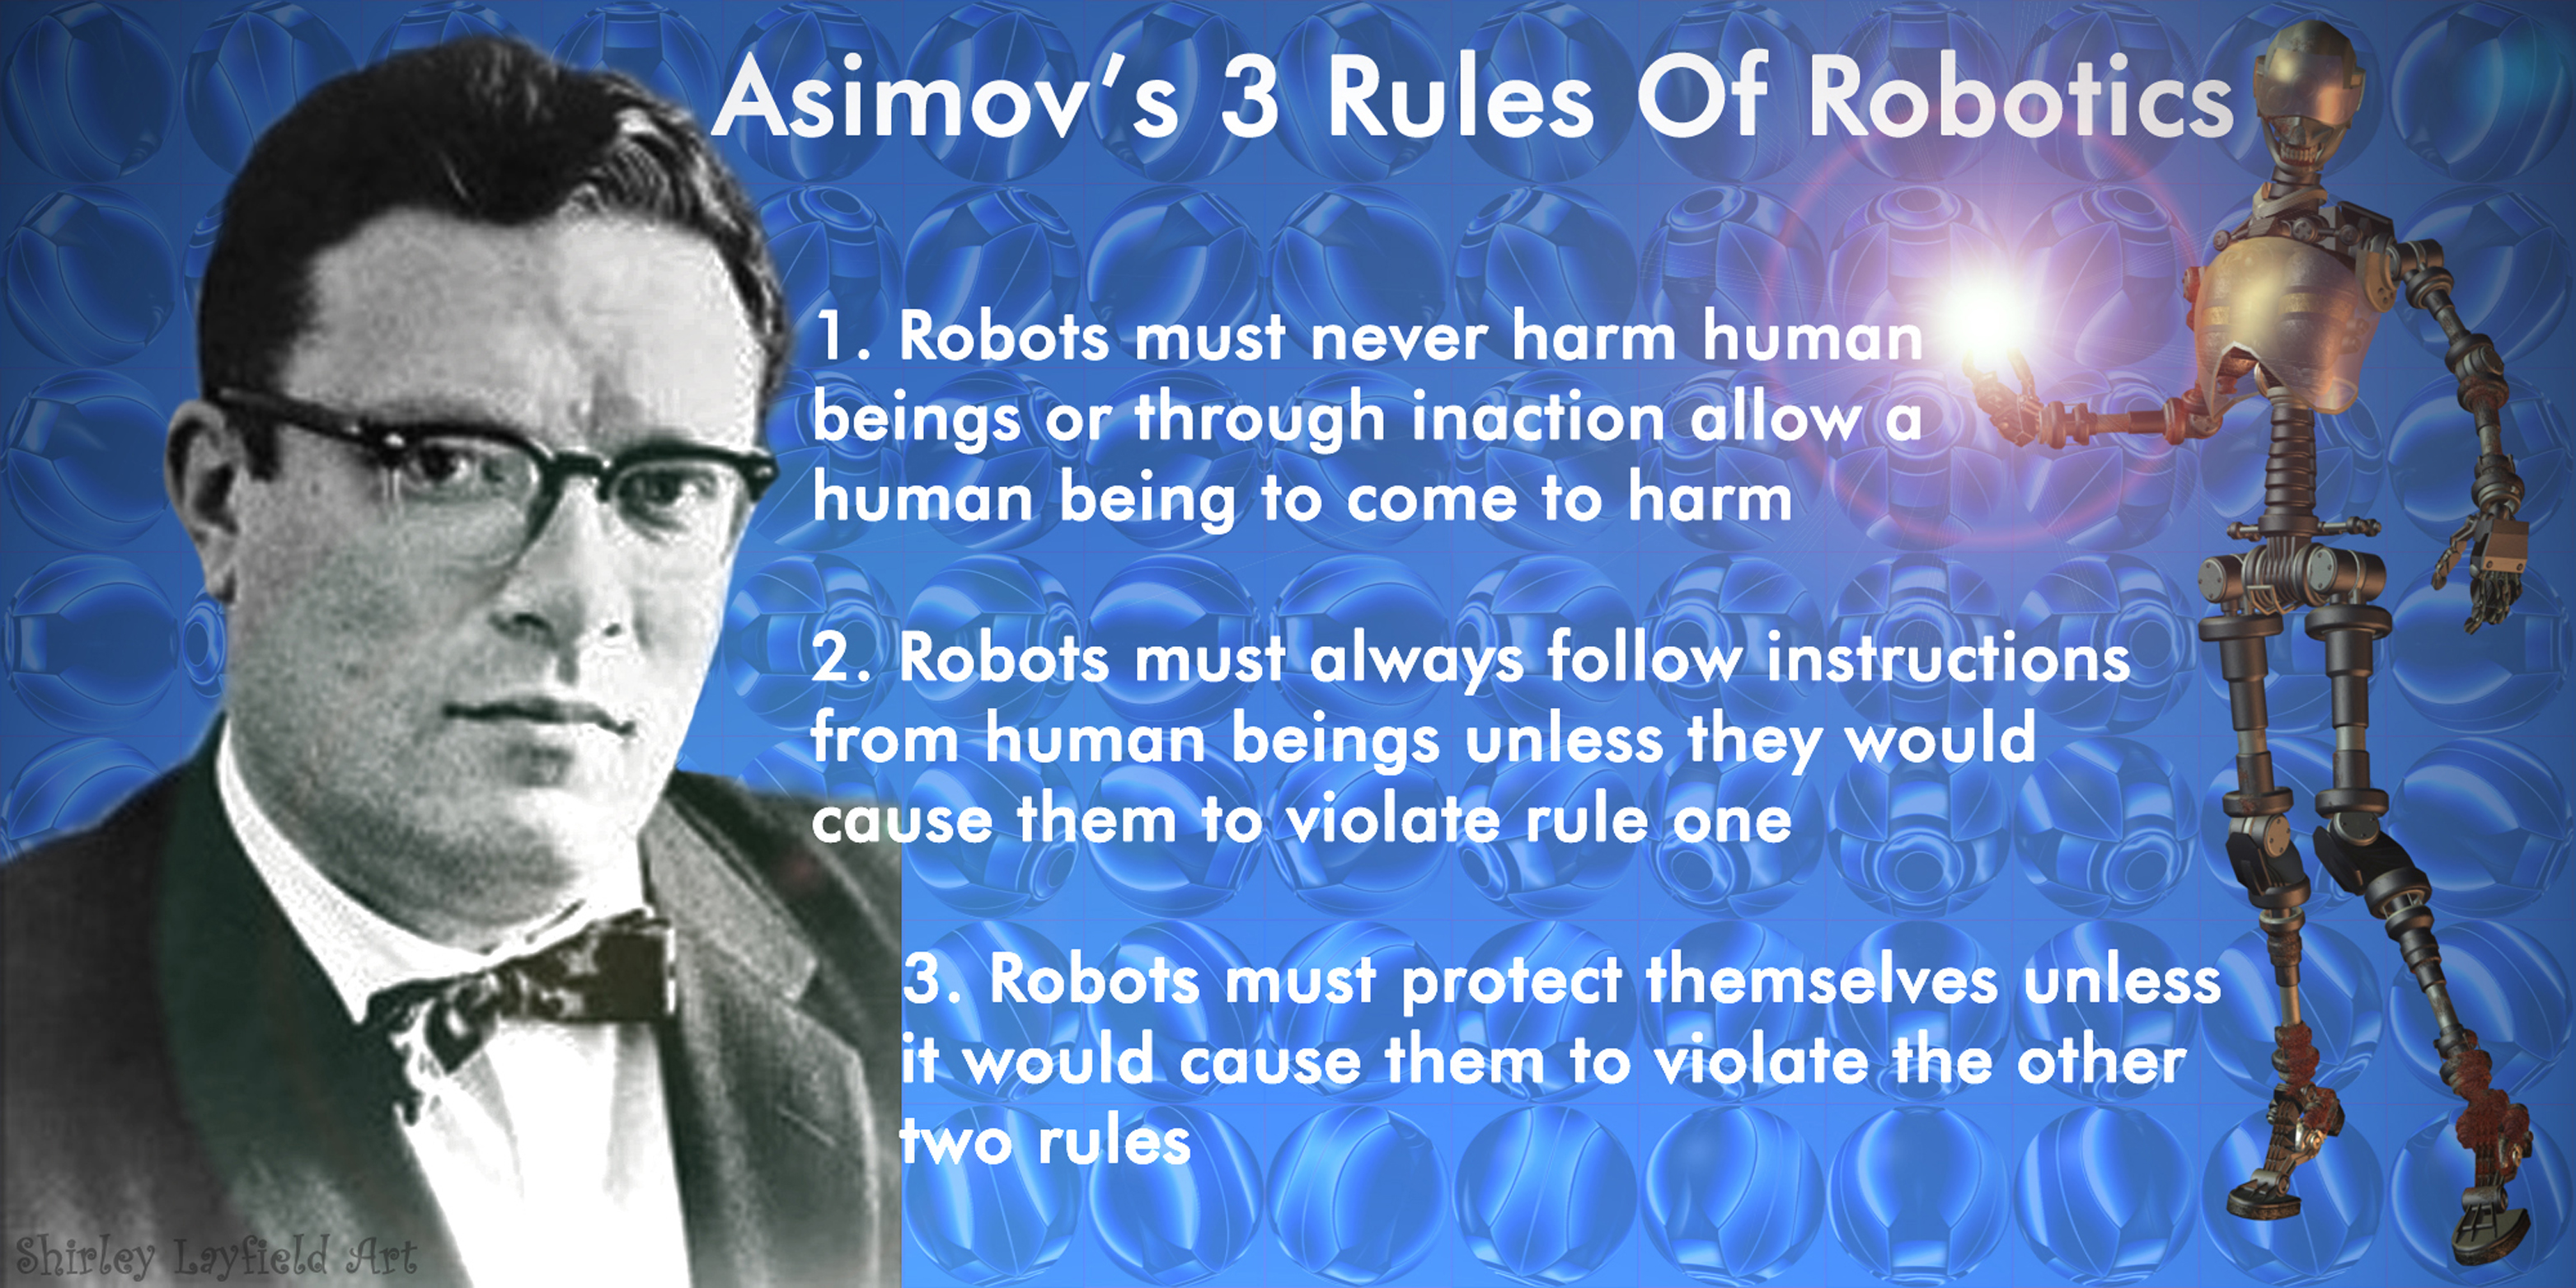 græs kort vidne Asimov's Three Rules Of Robotics by Shirley-Agnew-Art on DeviantArt